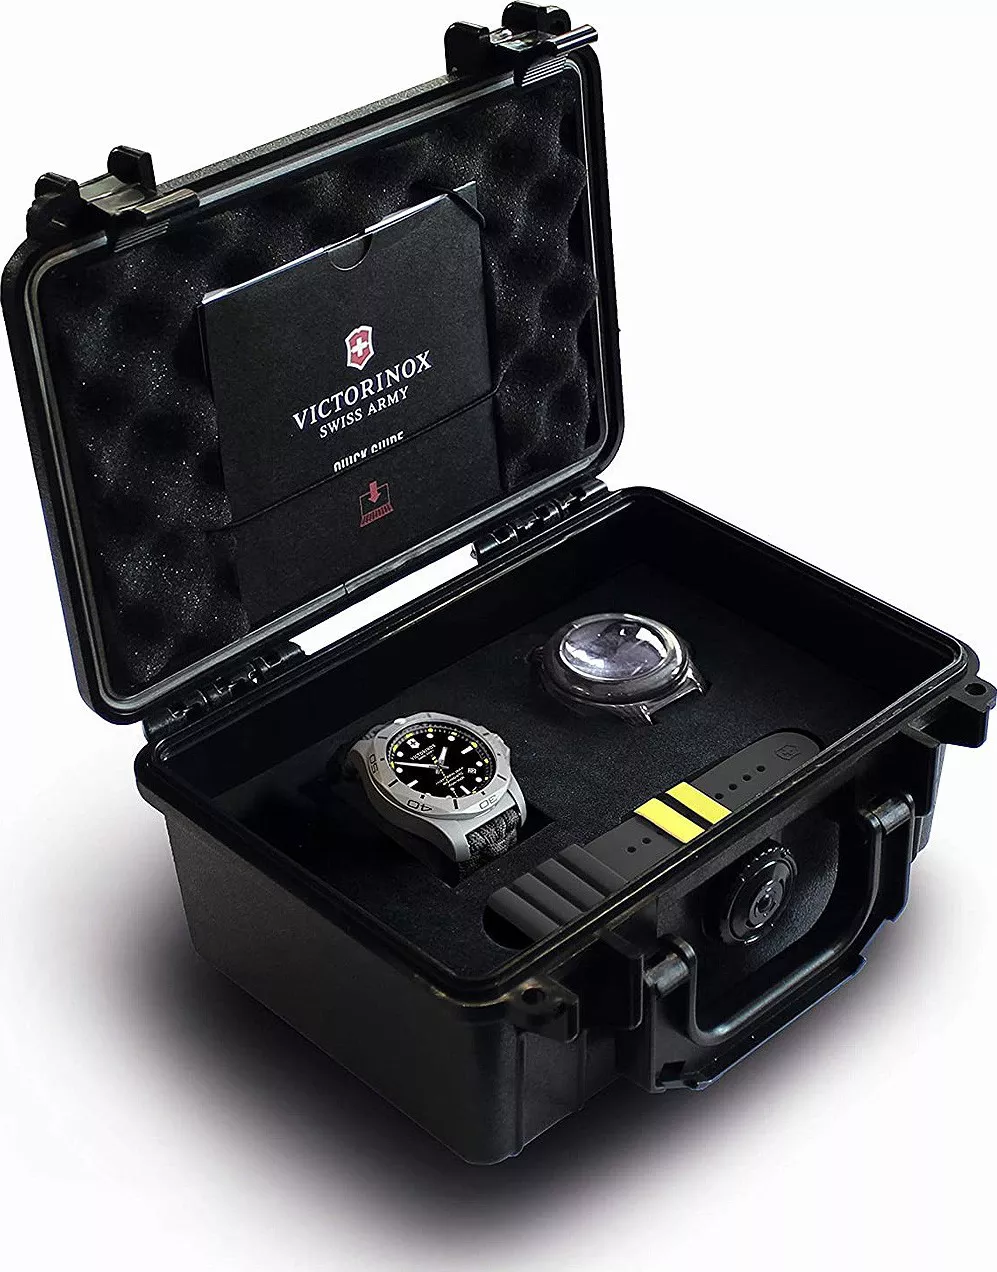 Victorinox I.N.O.X. Professional Diver Watch Set 42mm